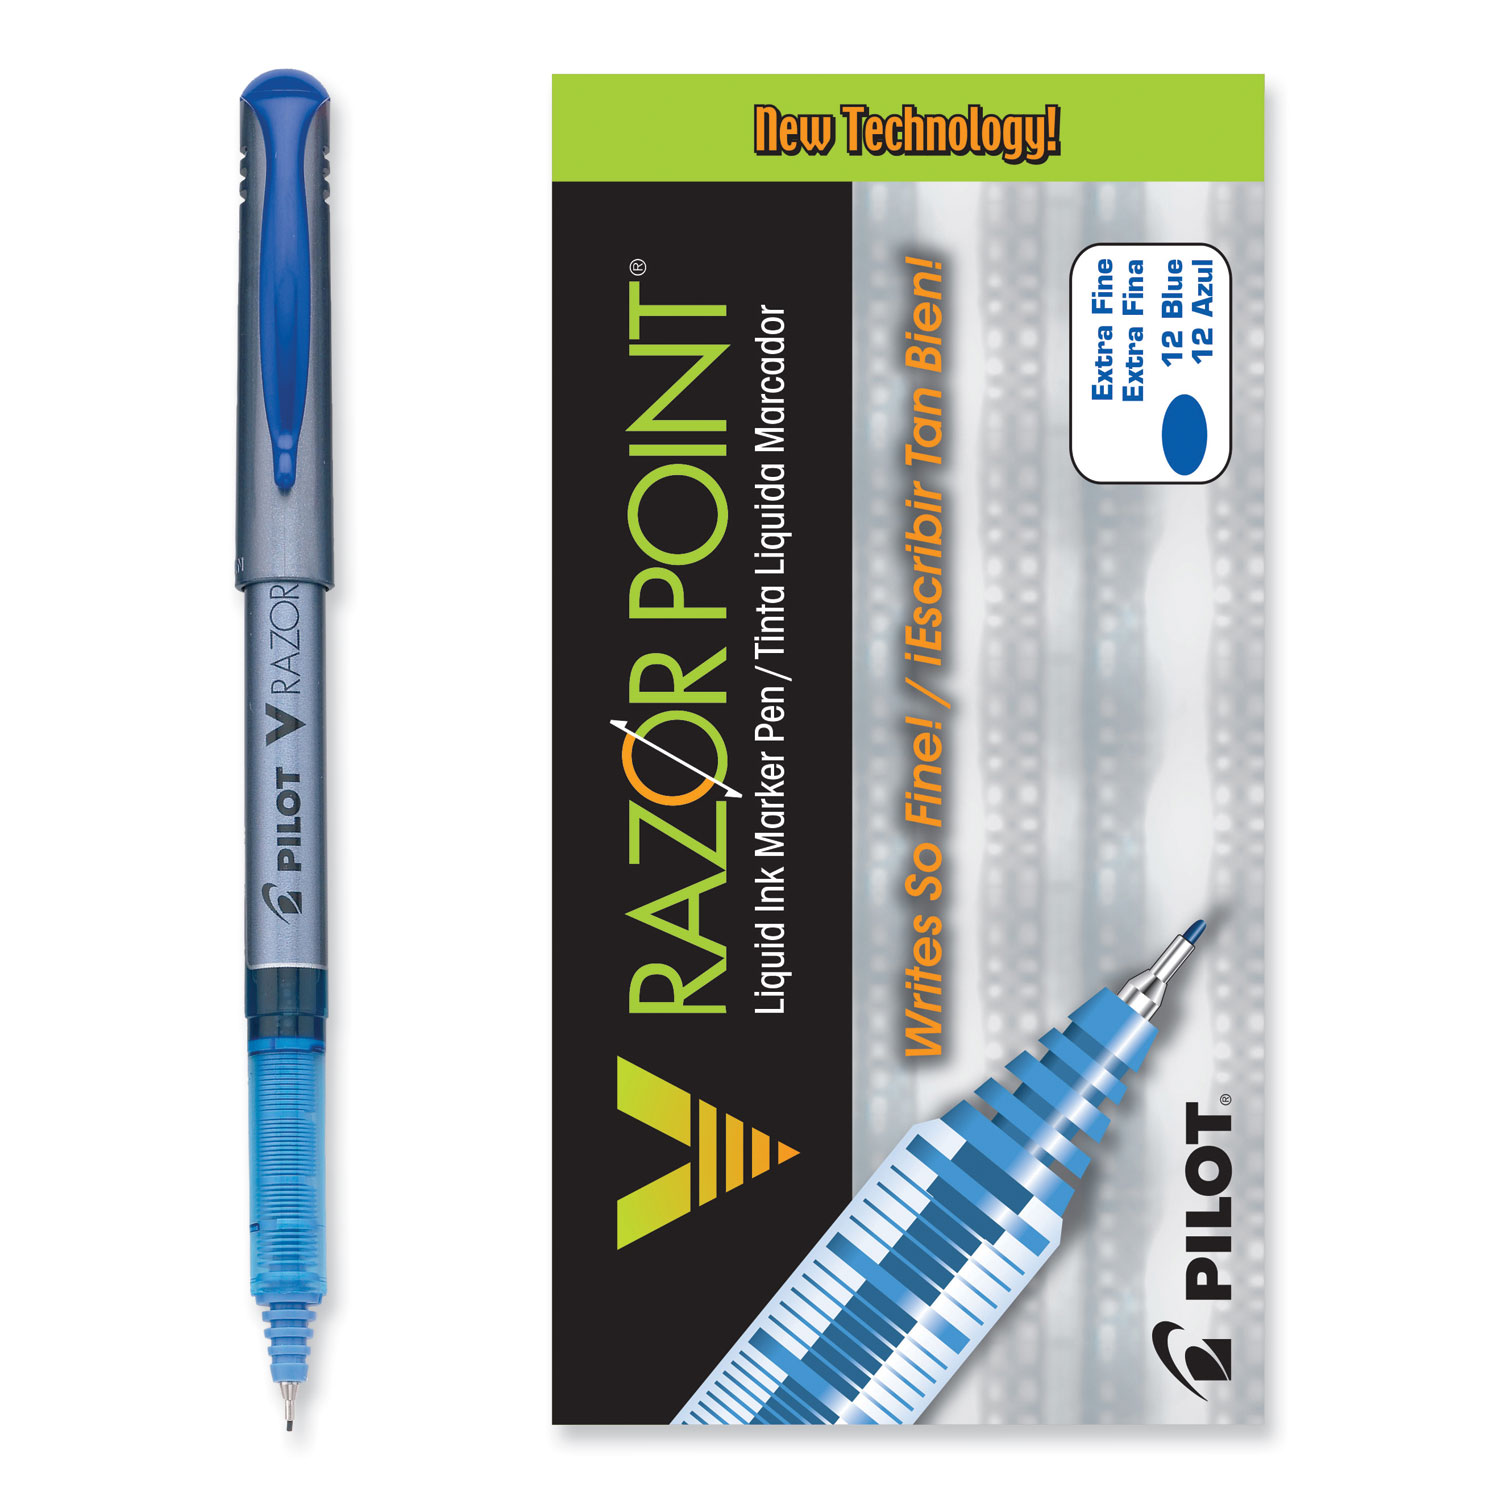 BIC Intensity Stick Marker Pen, 0.5mm, Assorted Fashion Color Ink